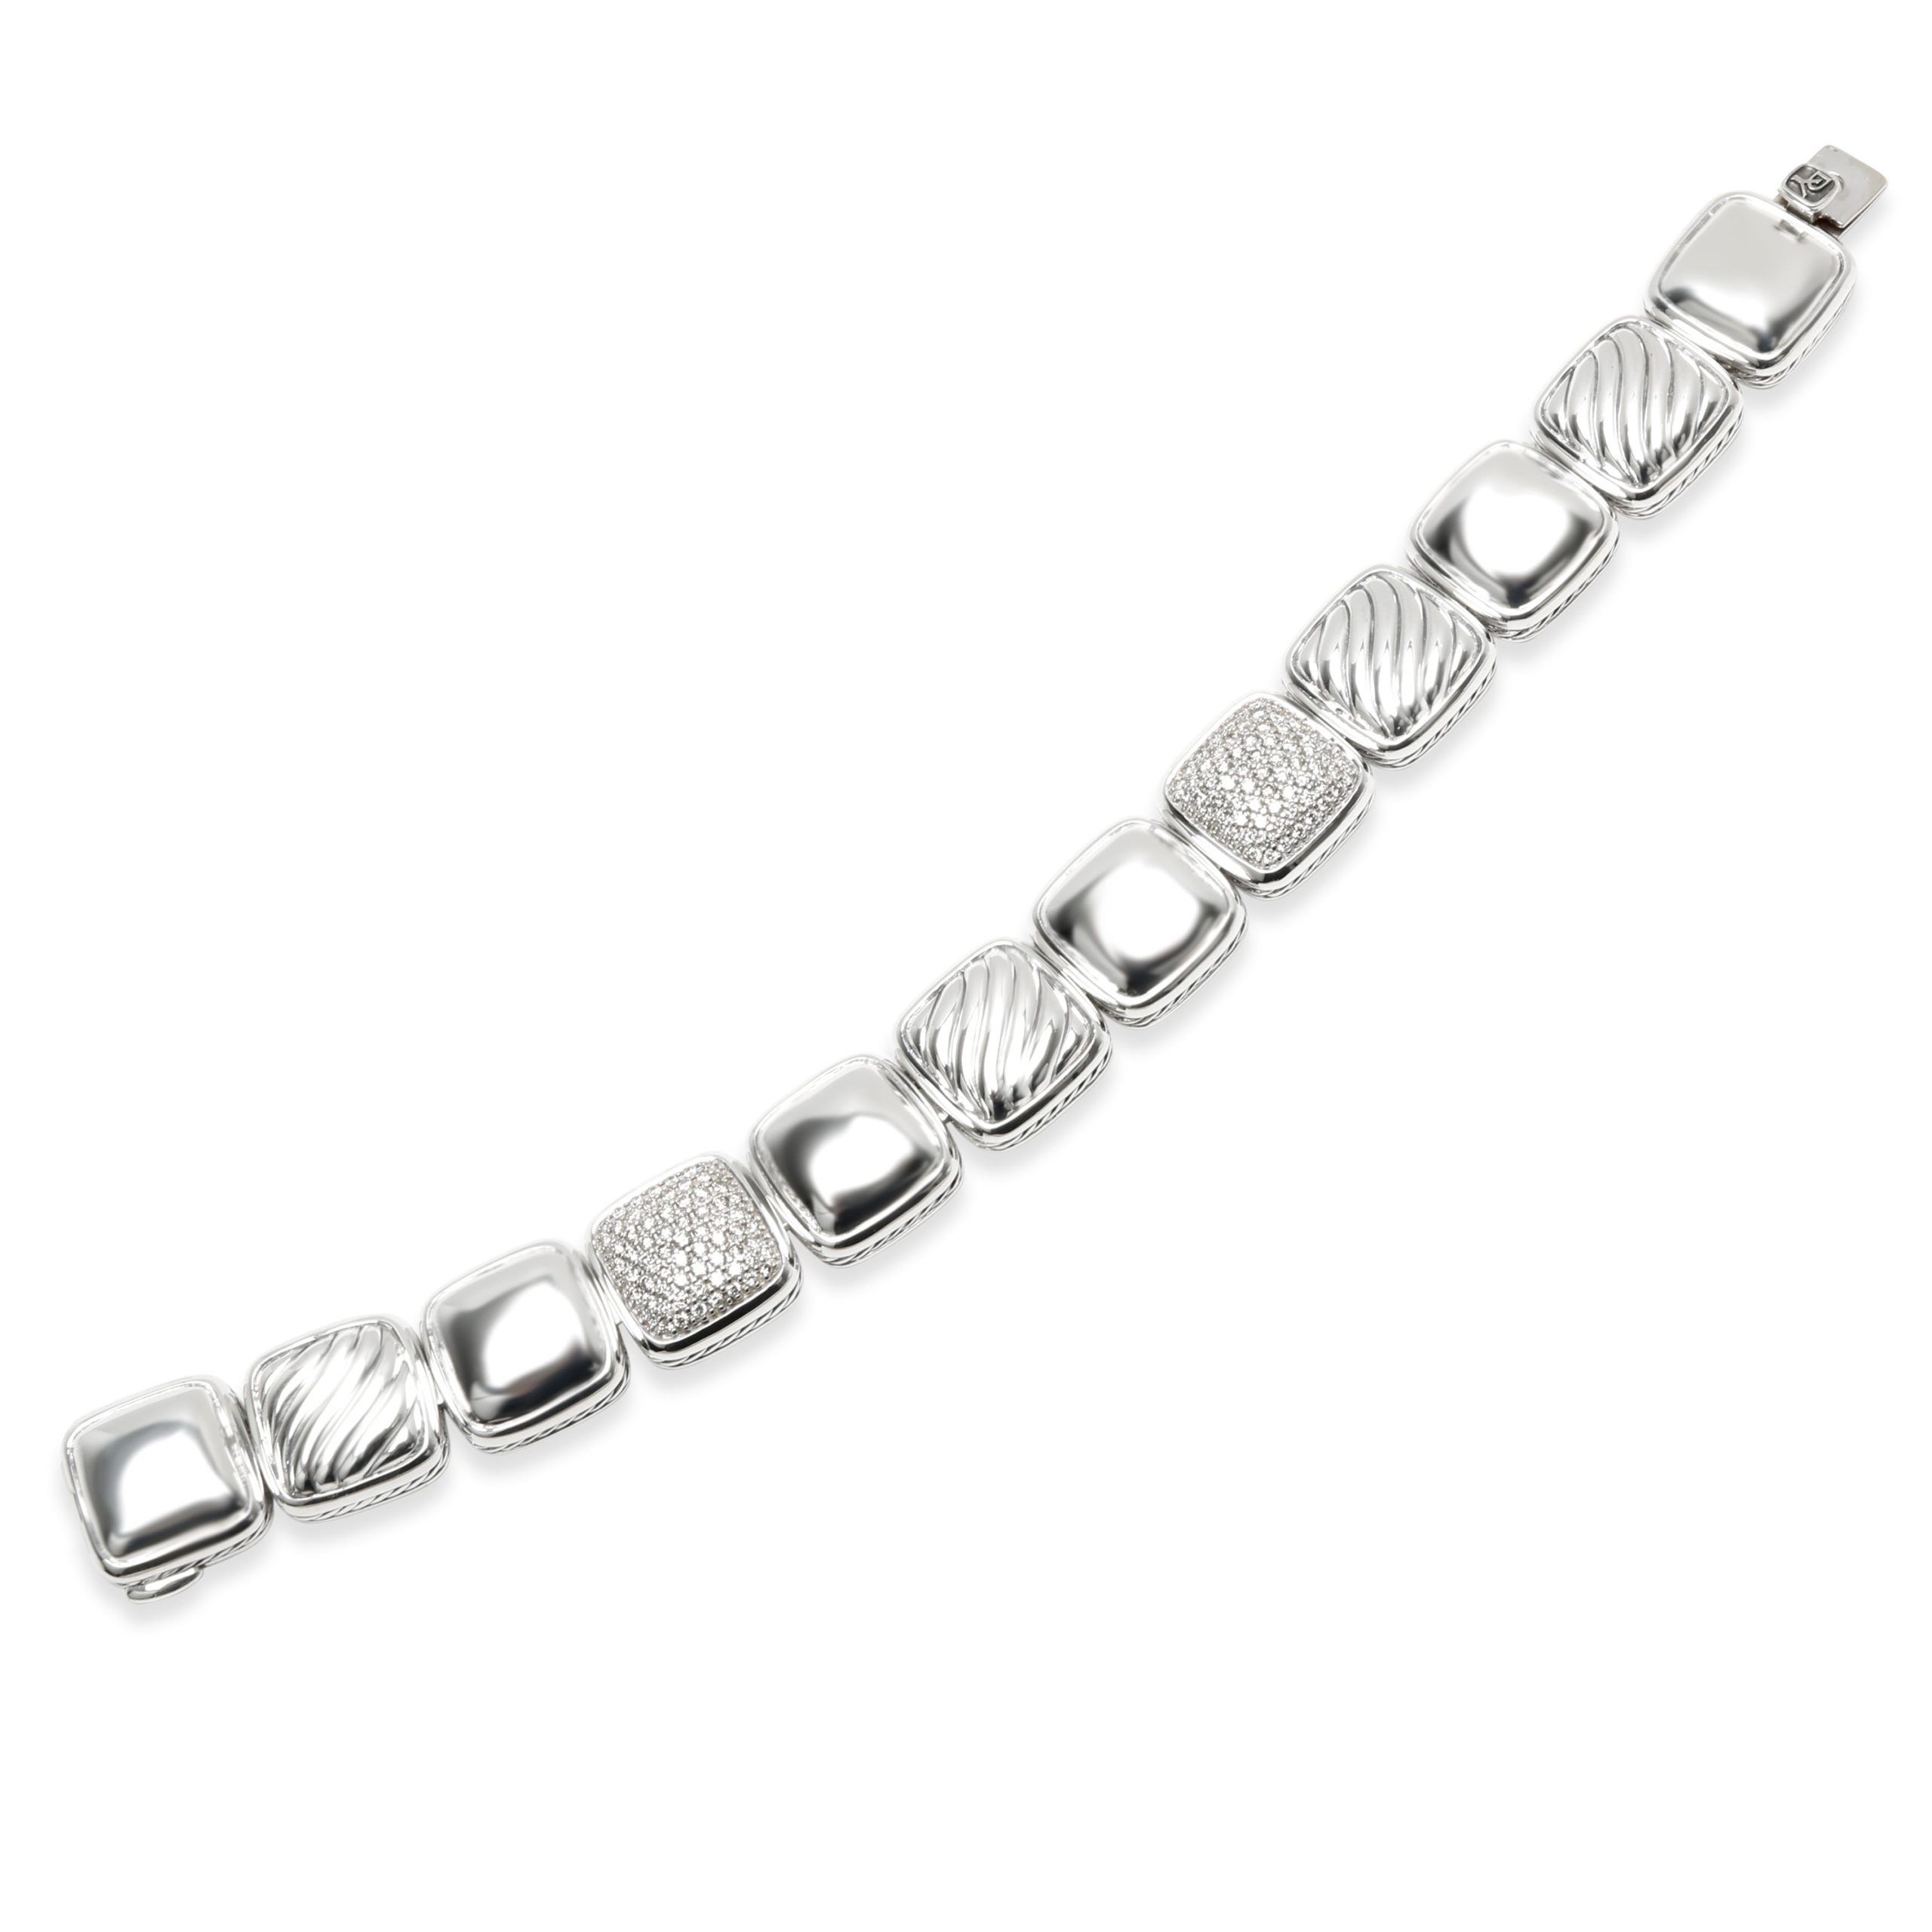 David Yurman David Yurman Chiclet Diamond Bracelet in Sterling Silver 1.75 CTW Size ONE SIZE - 2 Preview